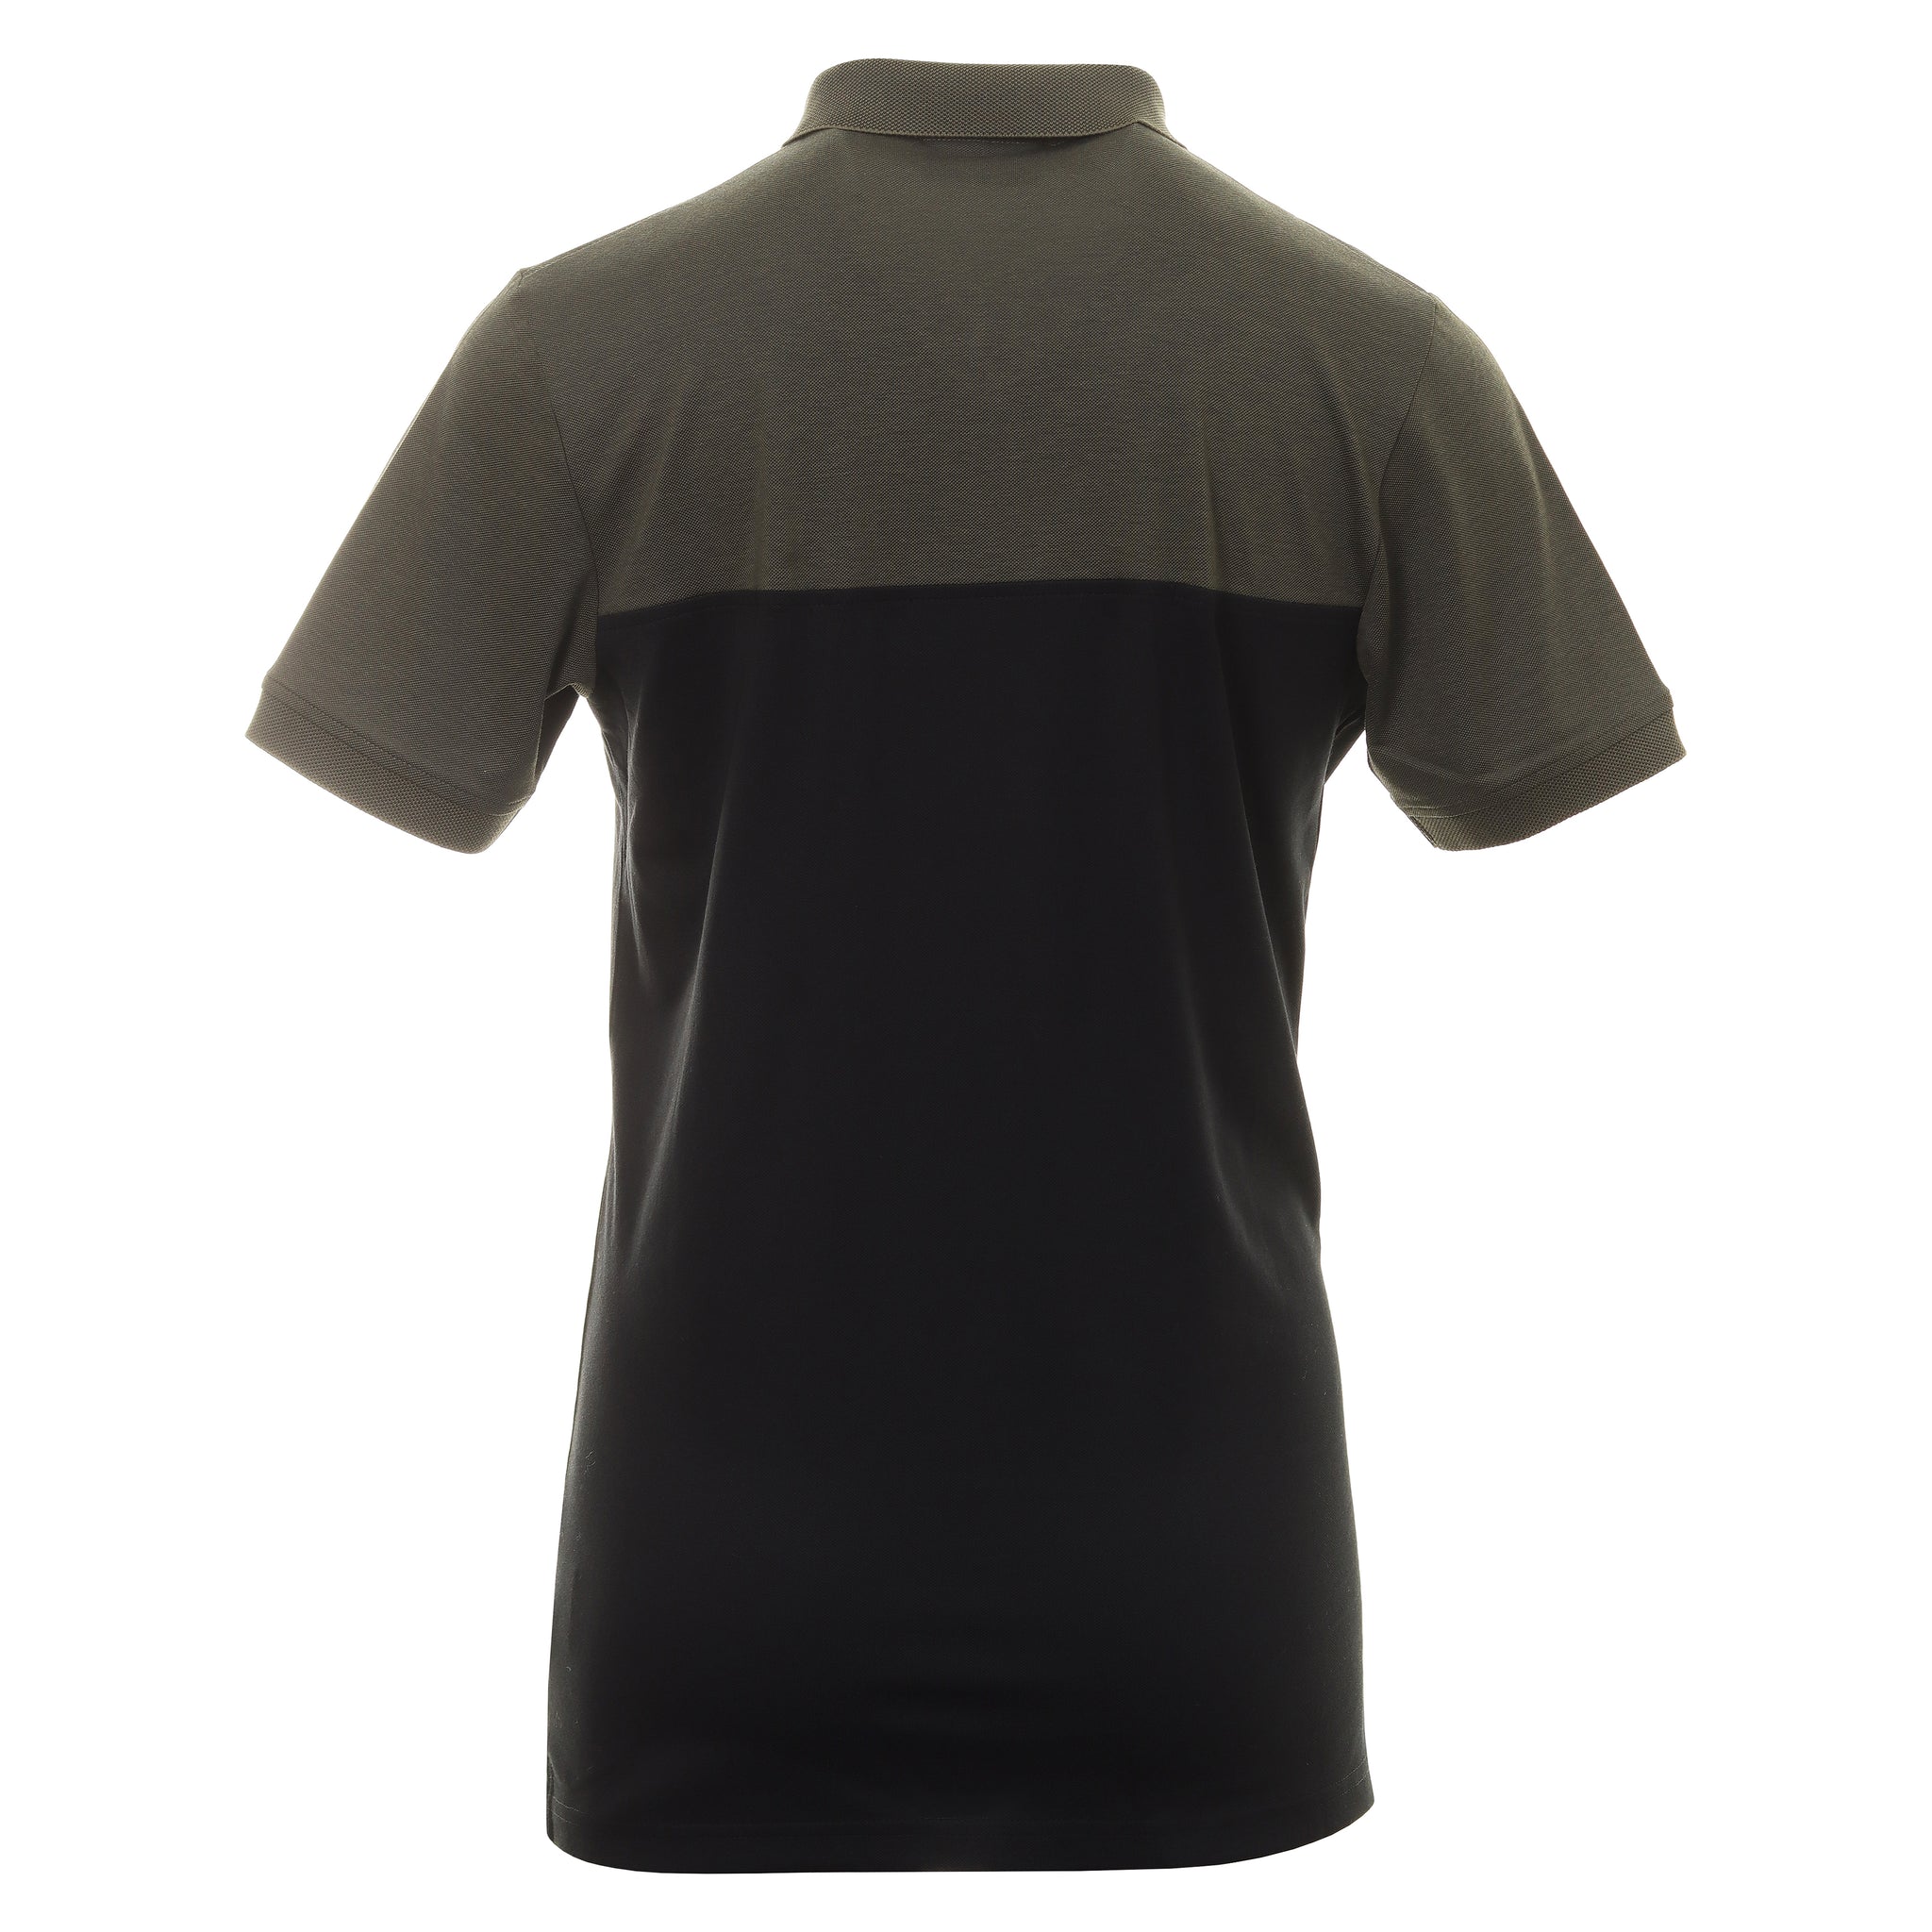 calvin-klein-golf-colour-block-shirt-c9690-olive-marl-black